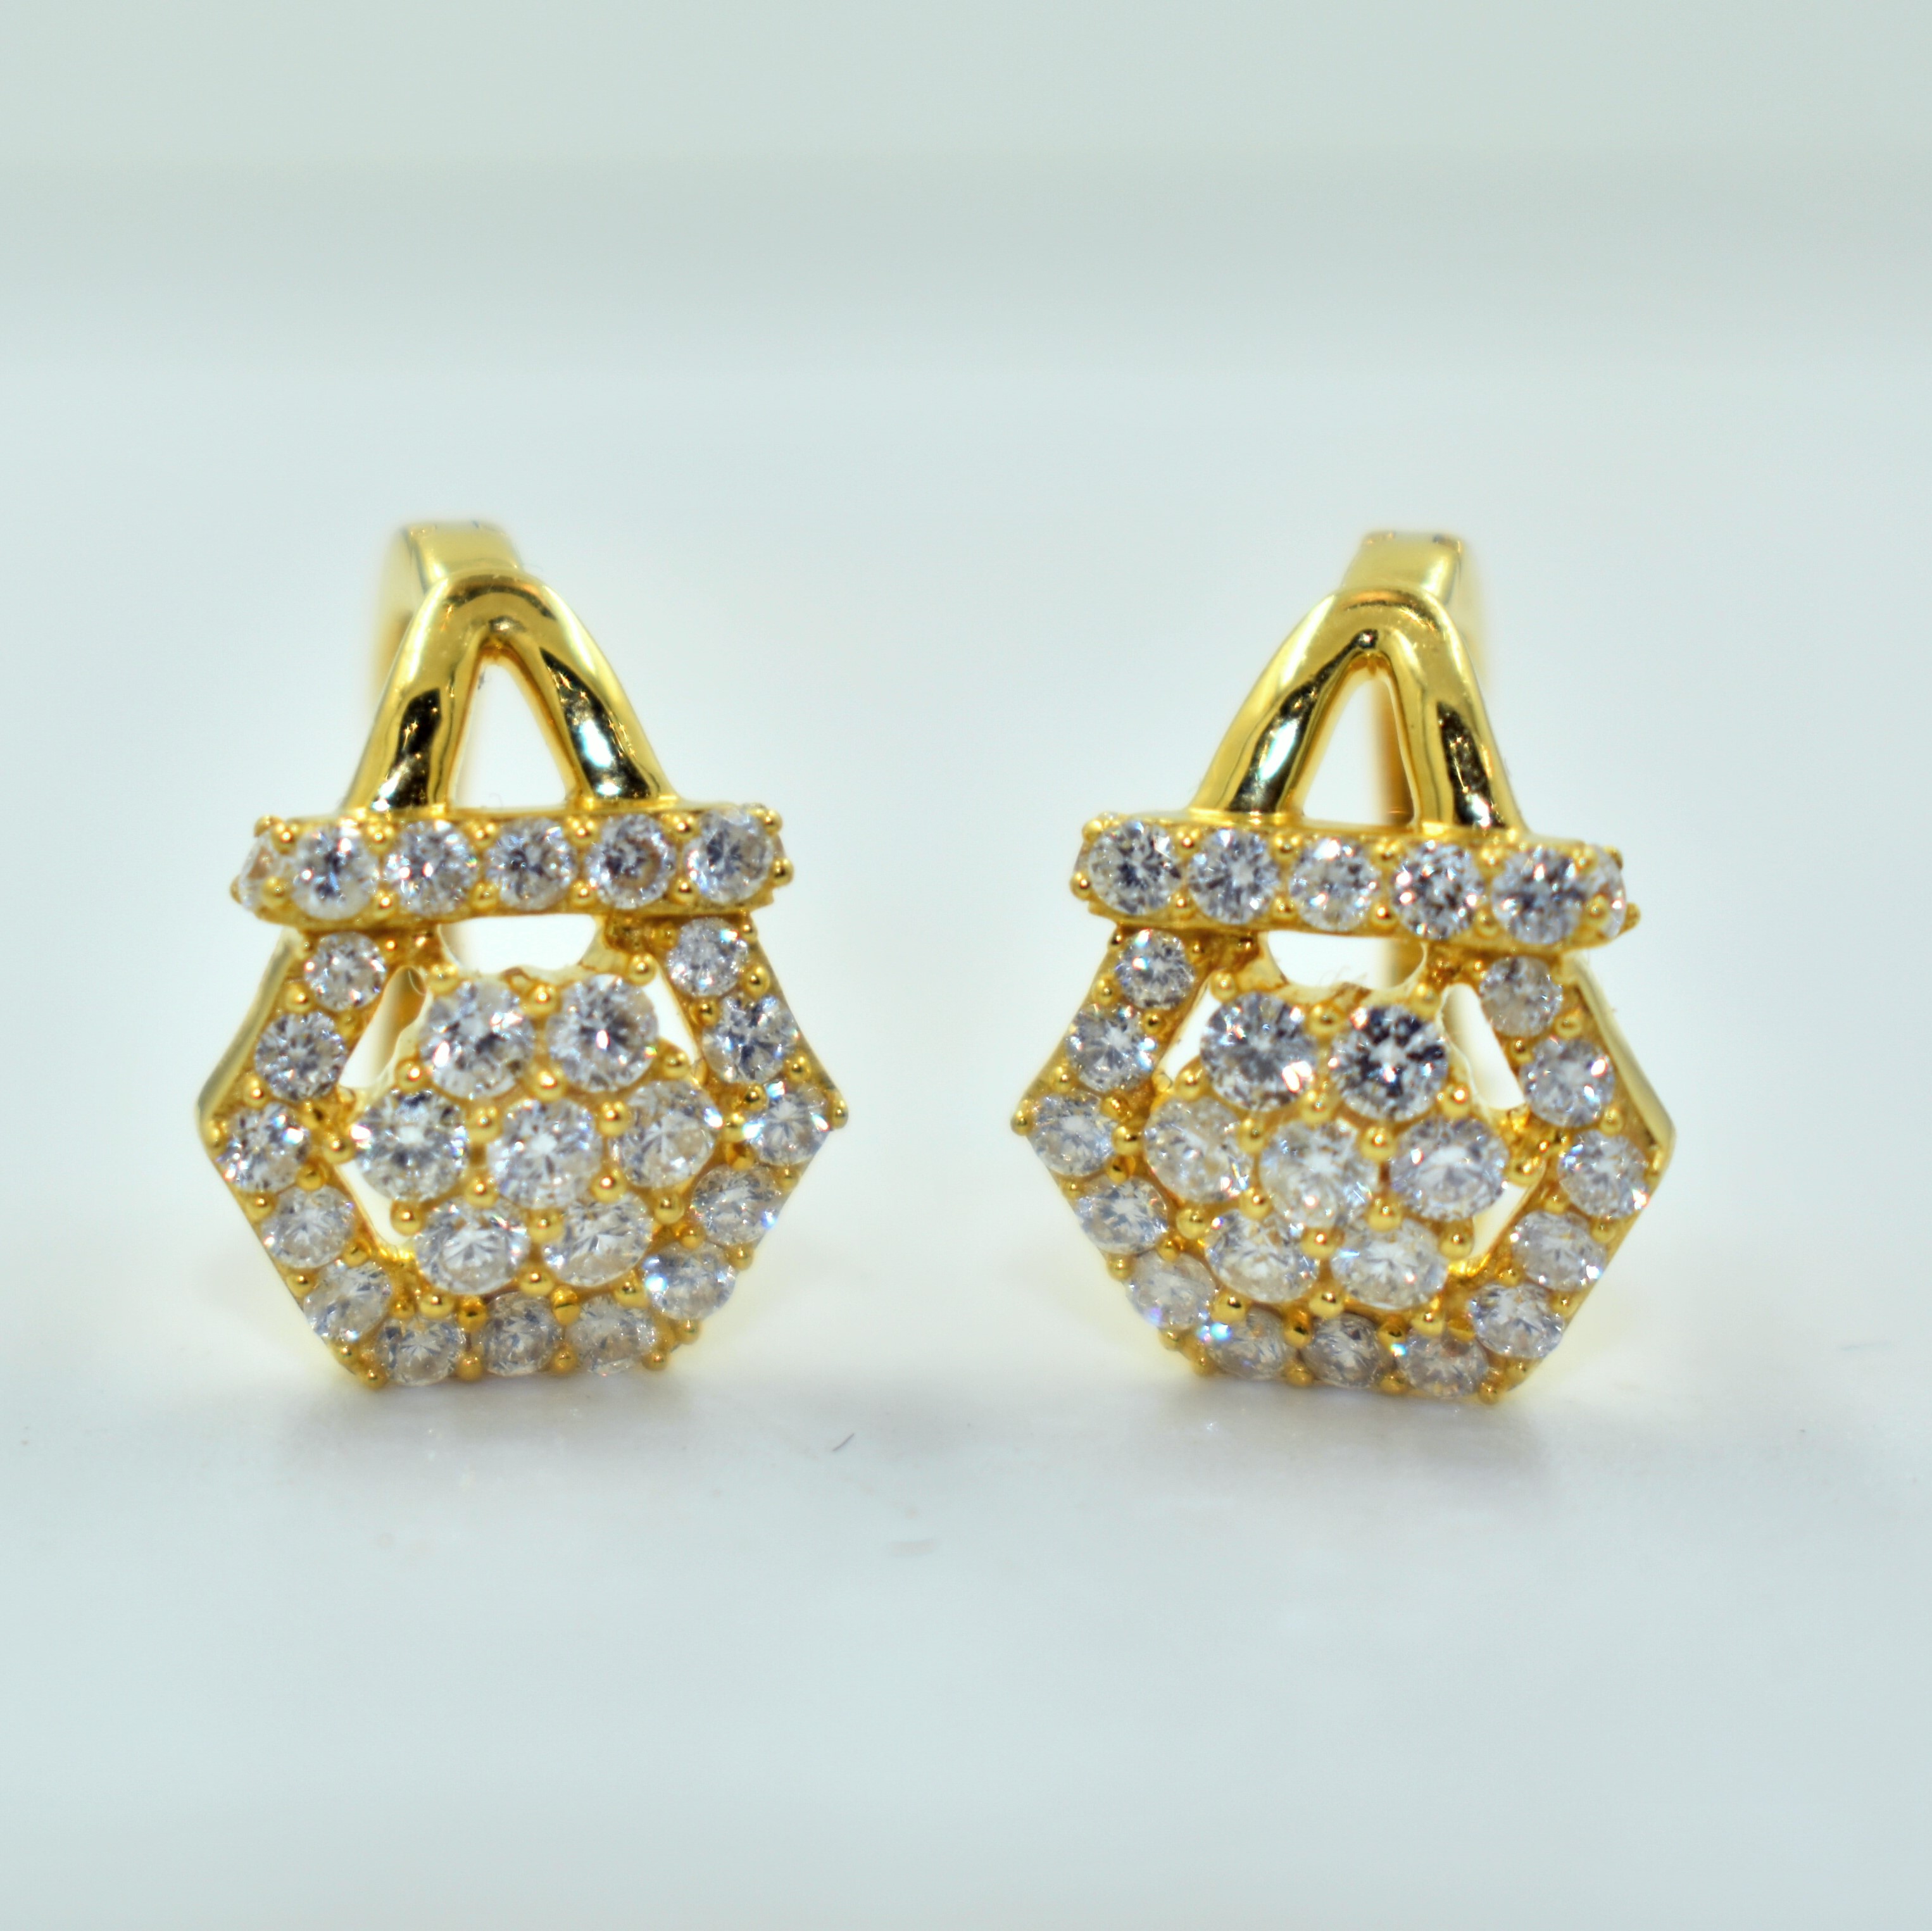 14K Yellow Gold
Diamonds: 1.28ct
Regular Price $4595
SALE $1595
Ref: SR510